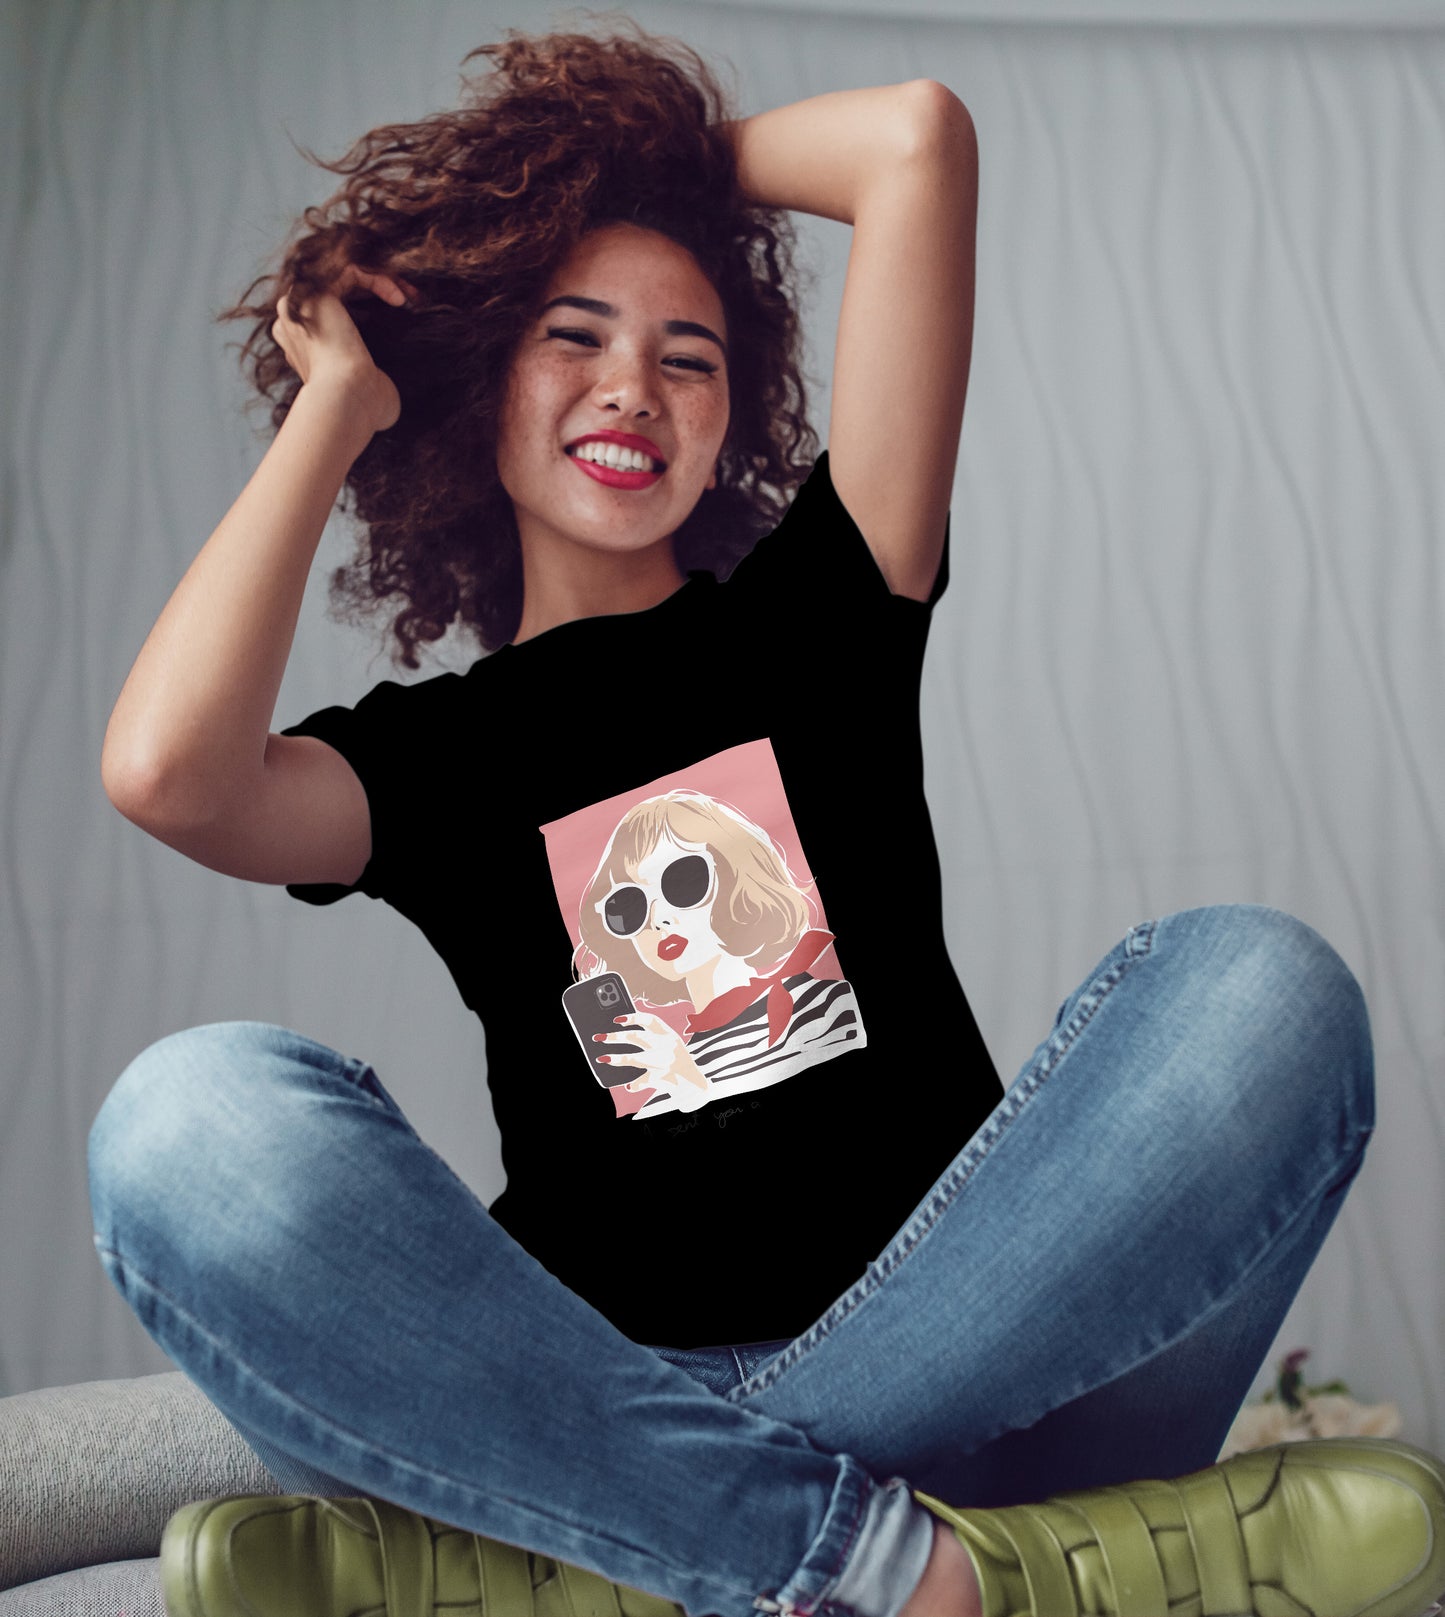 Girl Design T-shirt